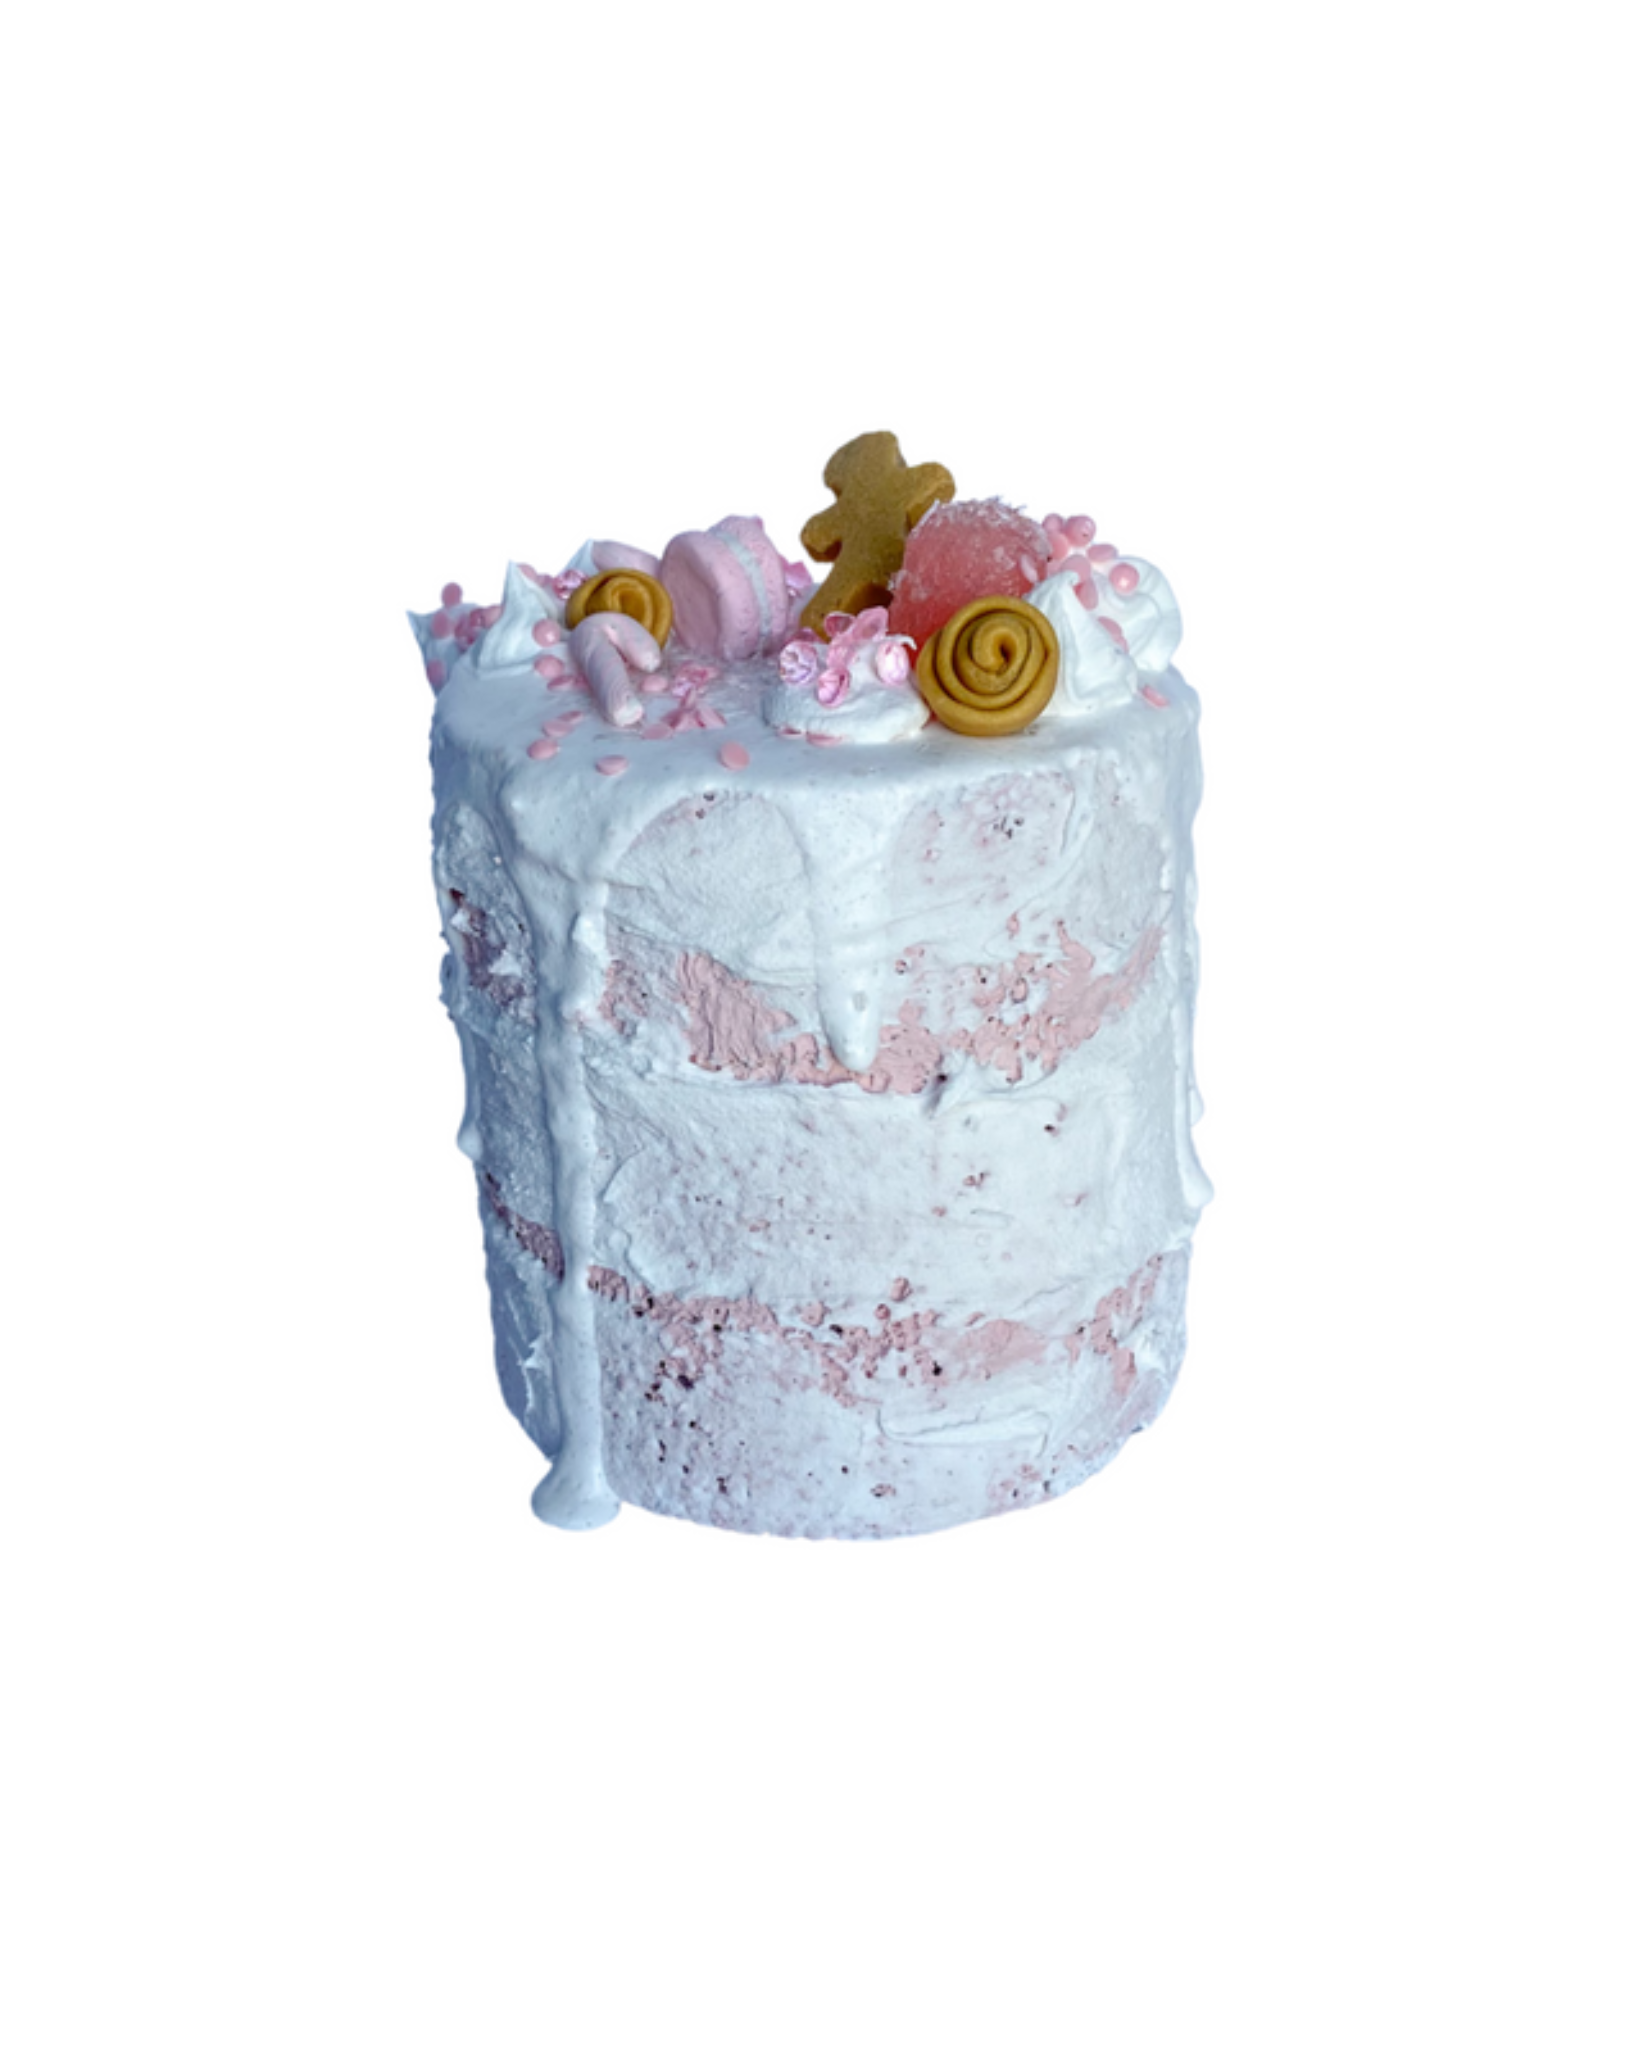 Everything Dawn Fake Cake Mini Faux Cake in Sugar Plum Sweets